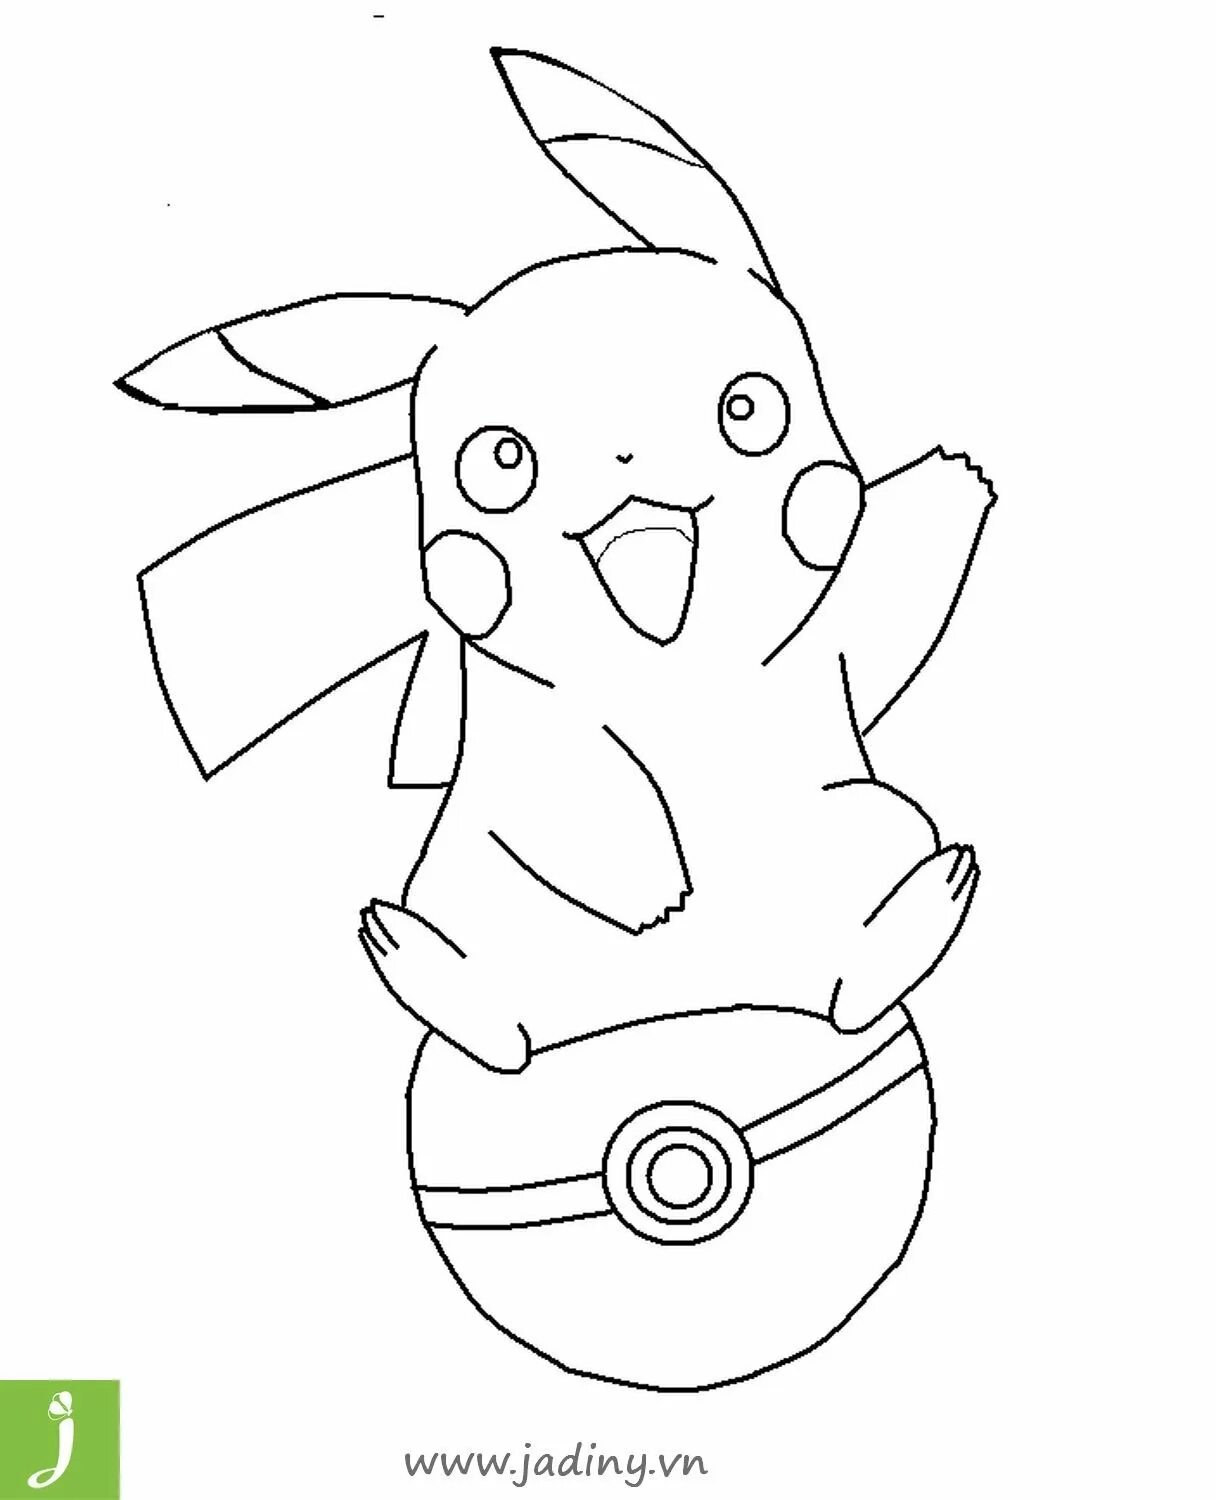 Stimulating pikachu coloring page